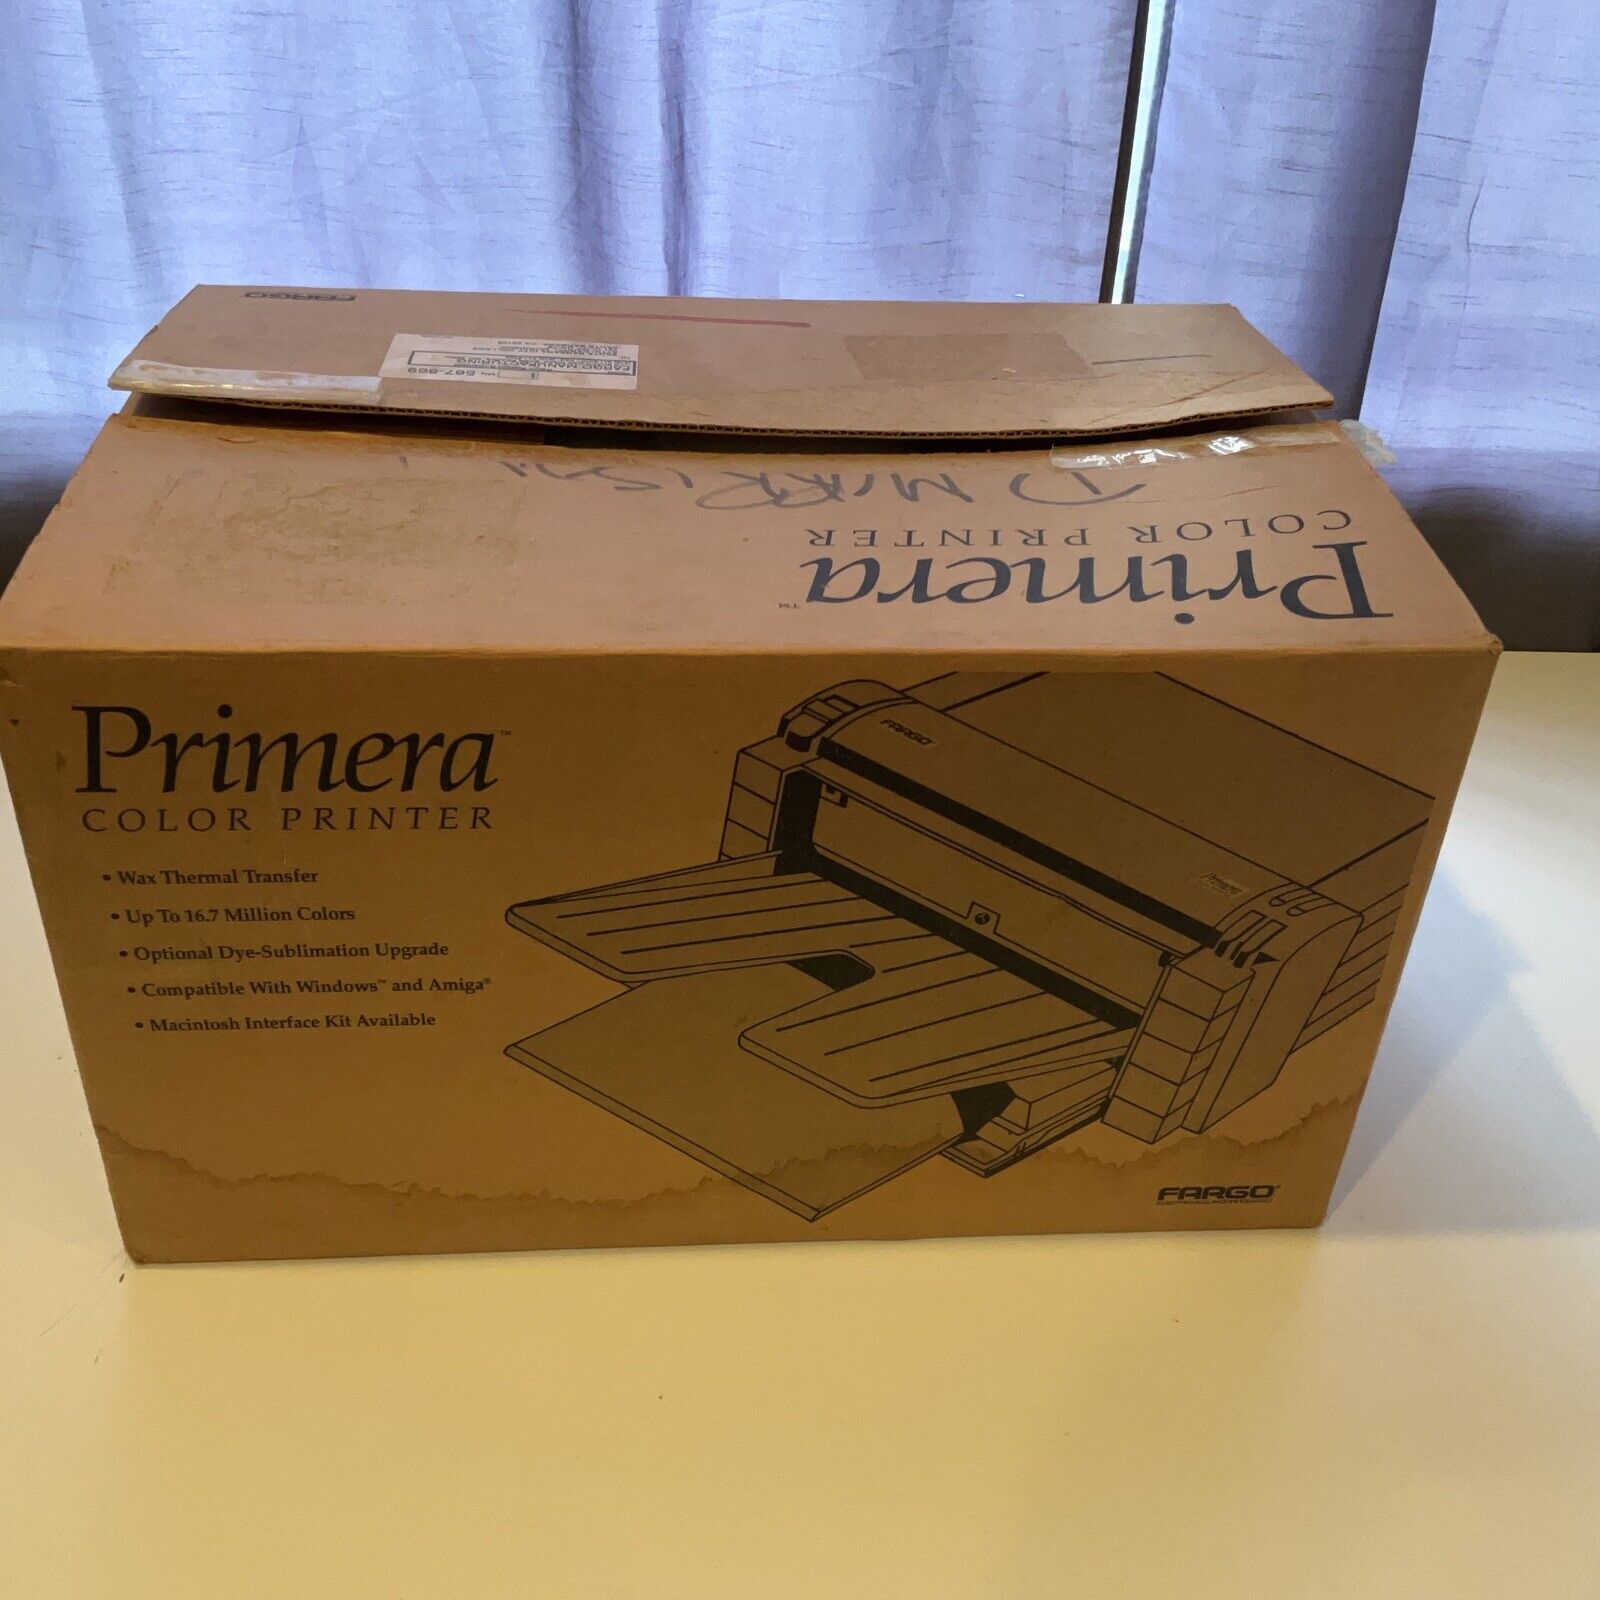 Primera Color Printer Thermal Transfer Color Printer With AC Adapter Vintage